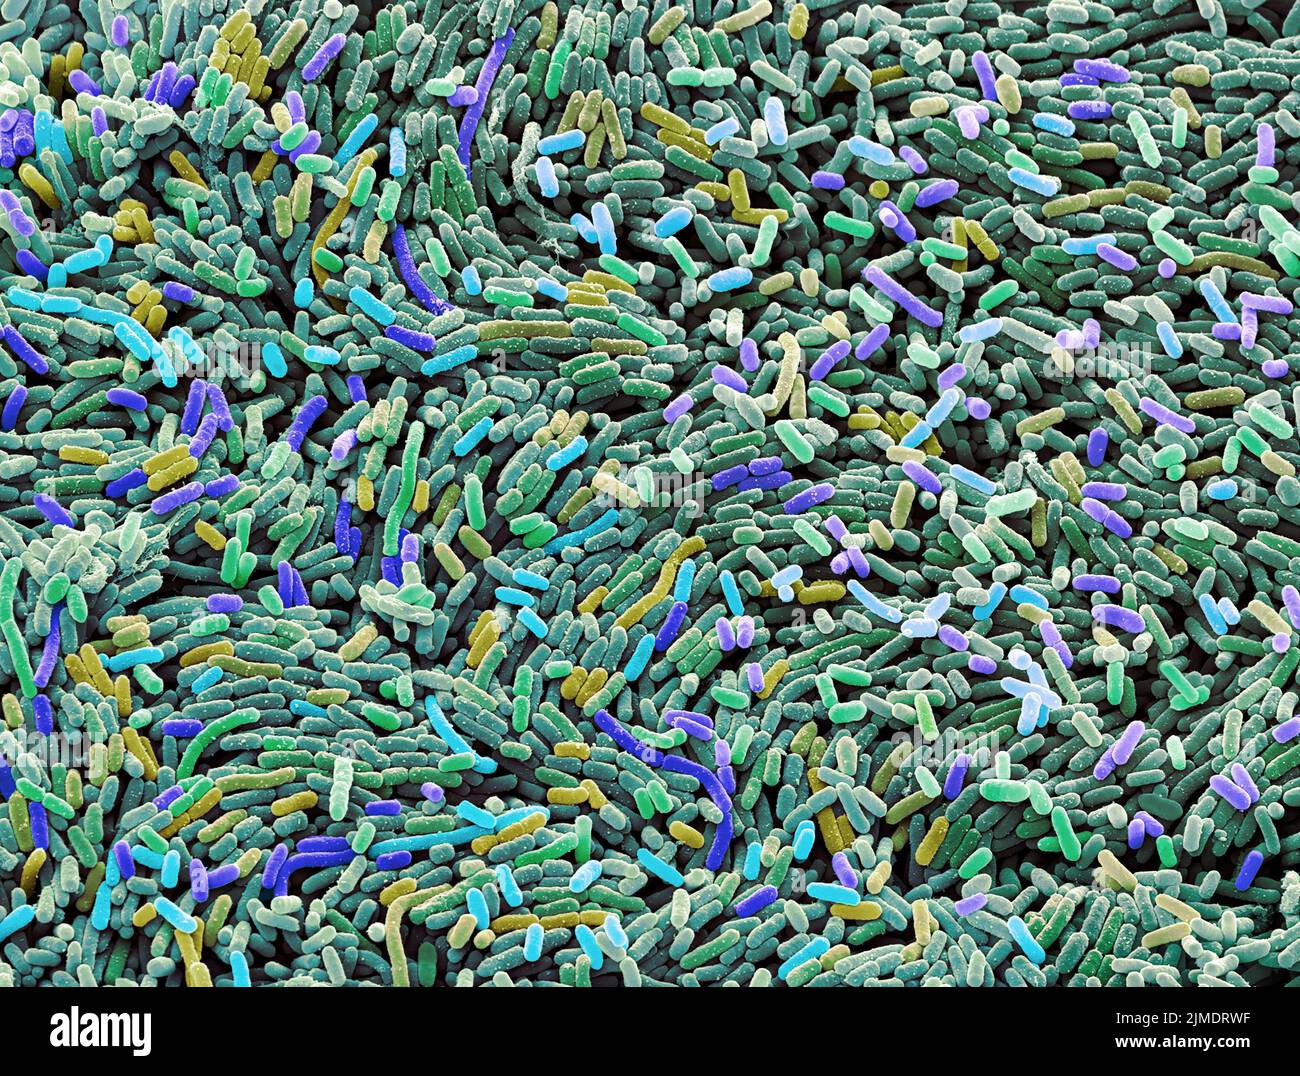 E.coli bacteria. Coloured scanning electron micrograph of the rod-shaped, Gram-negative bacteria Escherichia coli, commonly known as E. coli. These ba Stock Photo